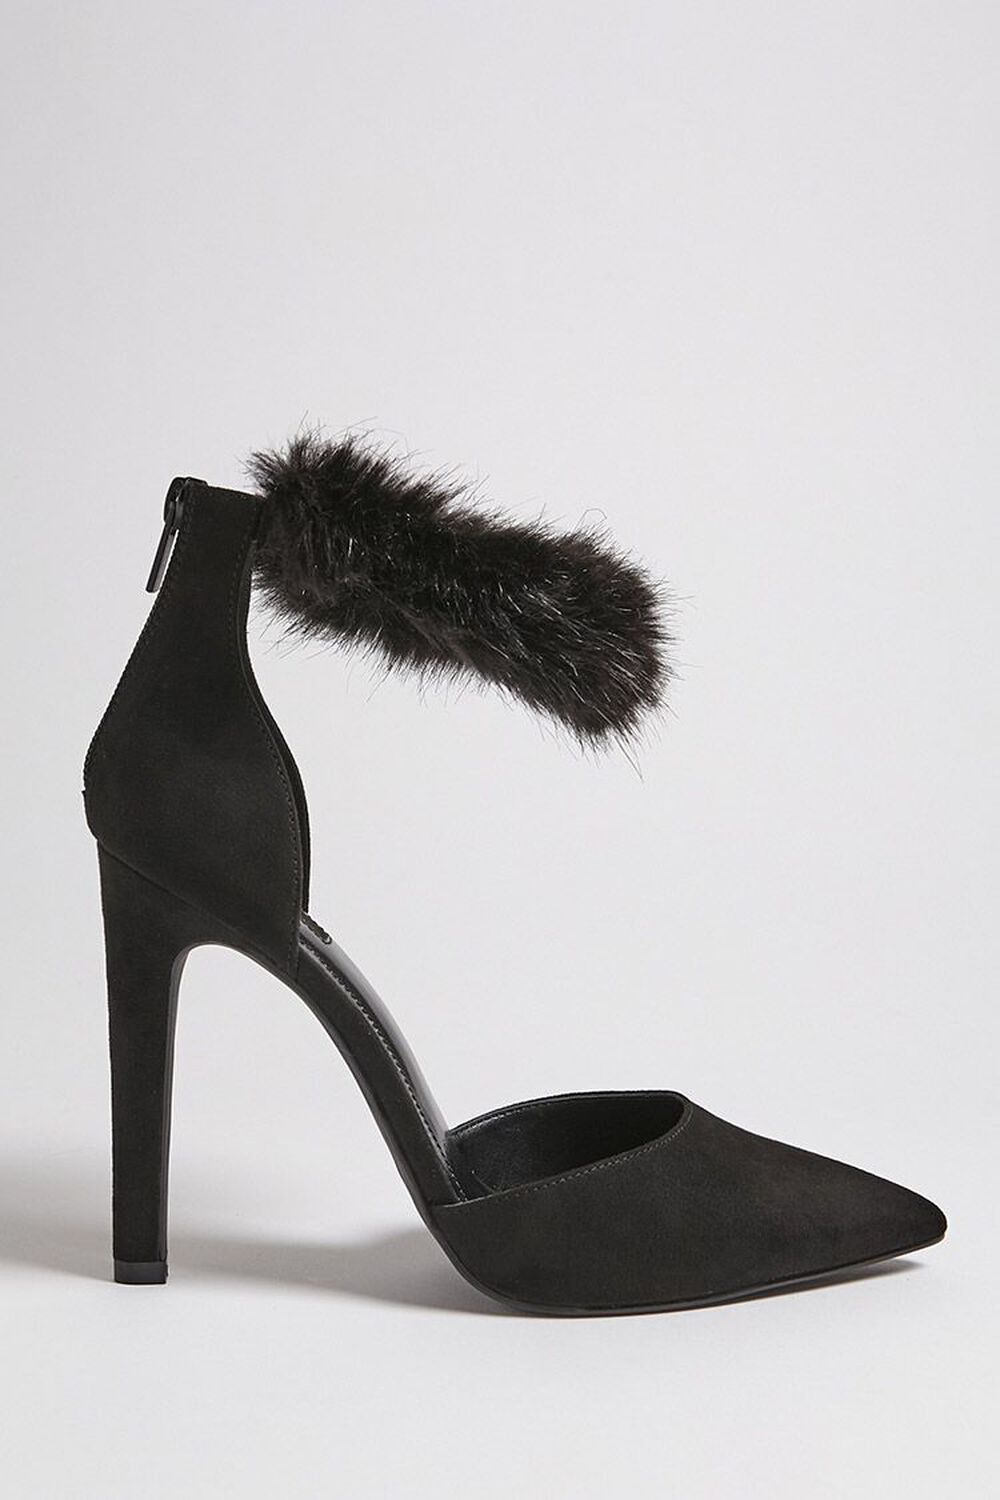 BLACK Faux Fur Ankle Strap Heels, image 1